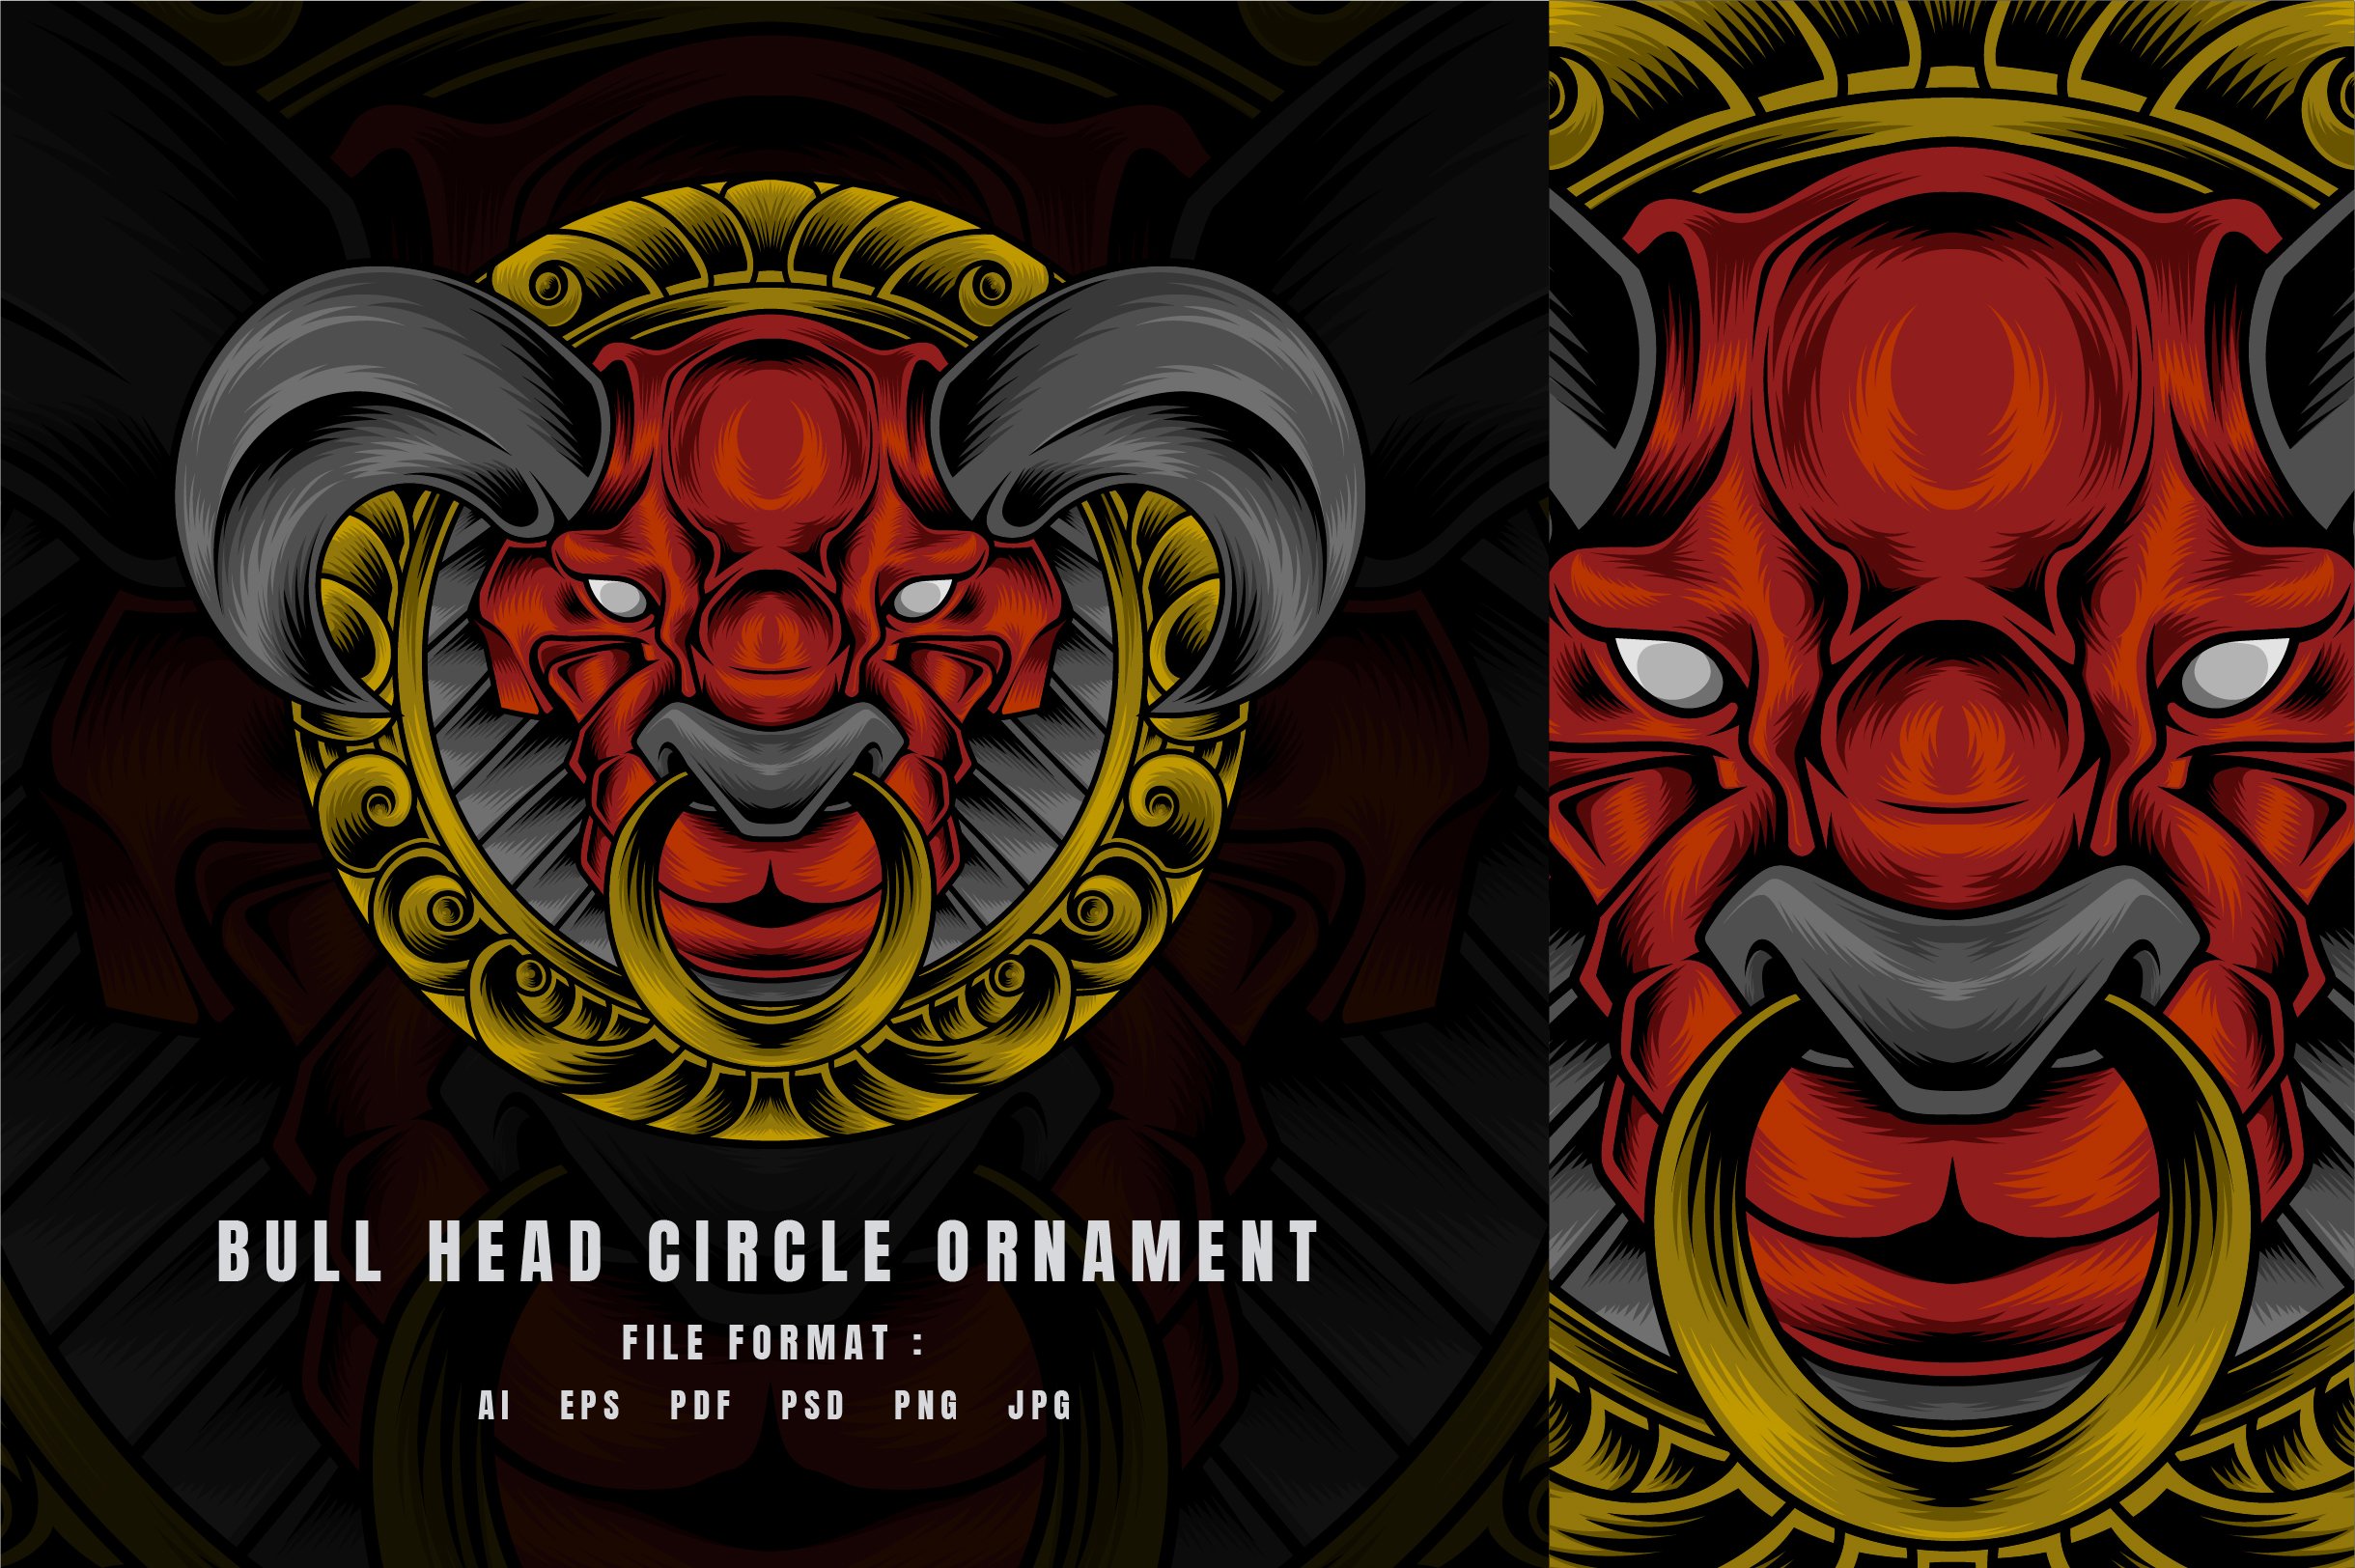 Bull Circle Ornament cover image.